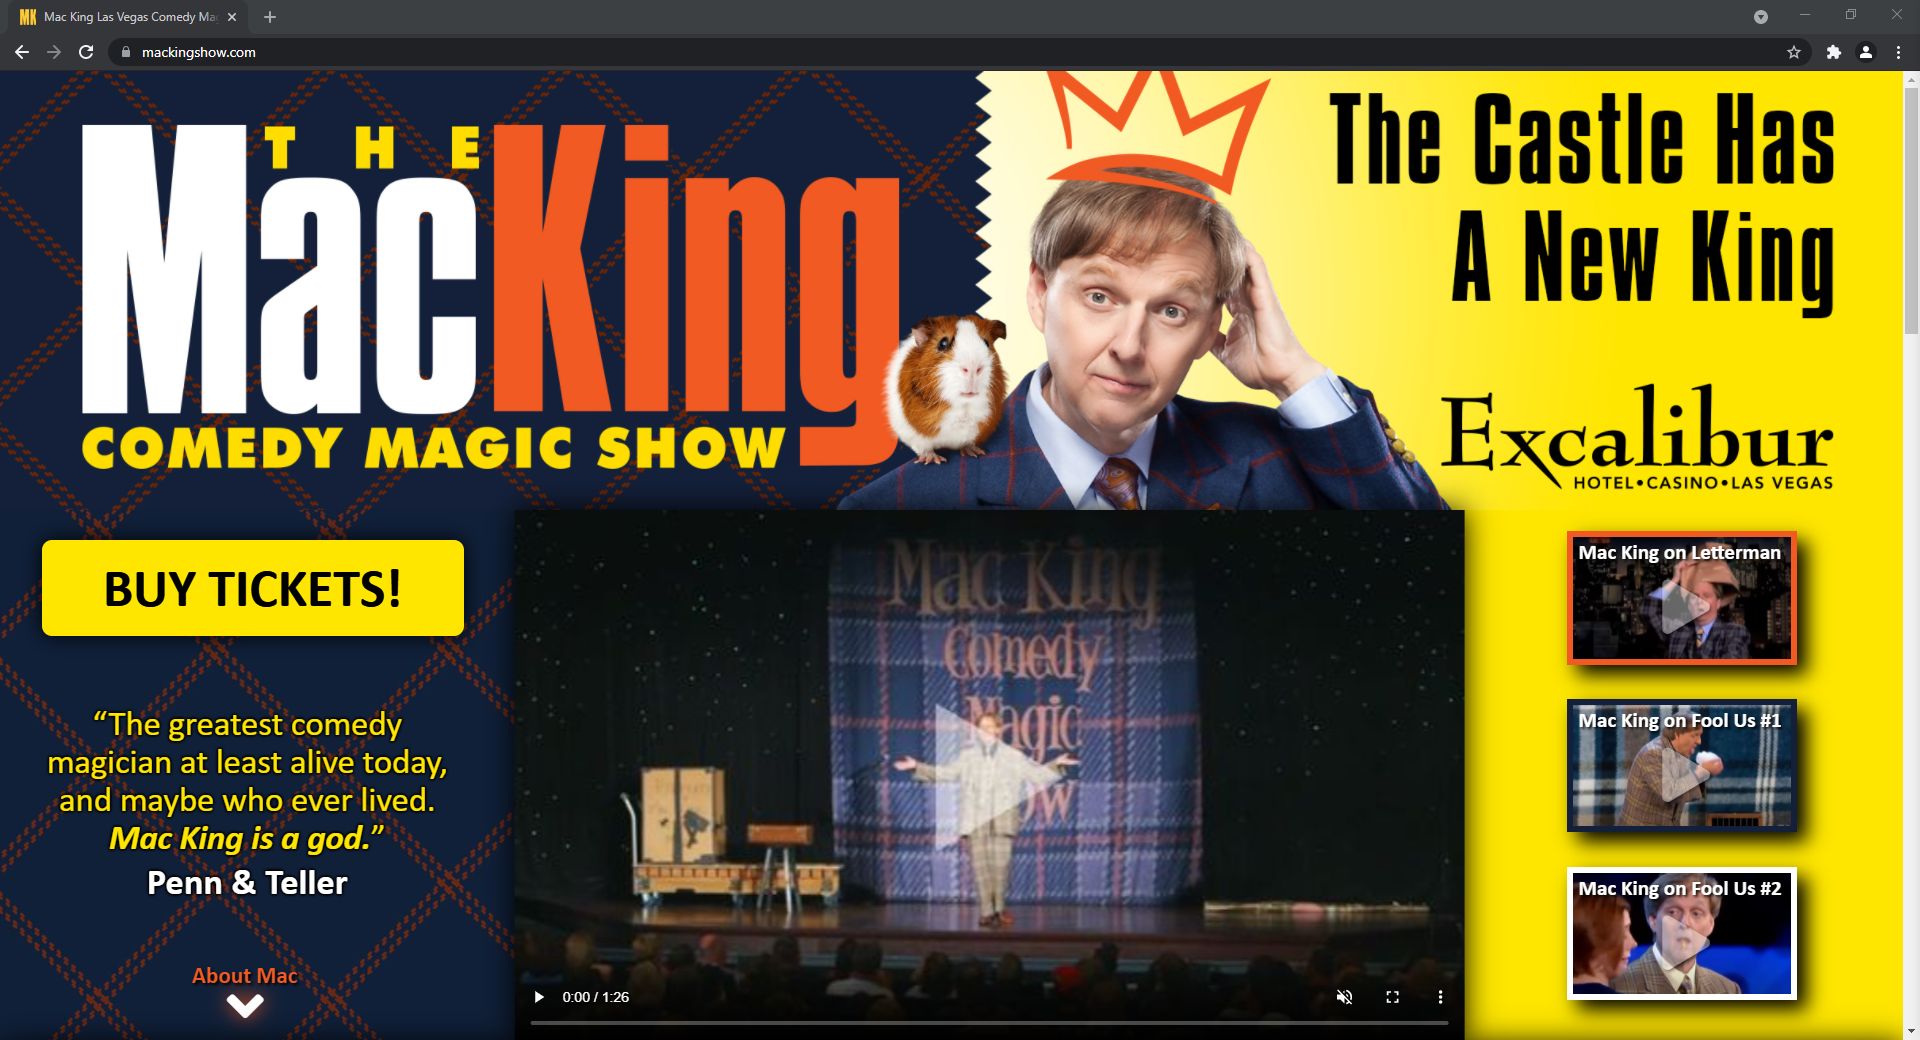 The Mac King Compedy Magic Show